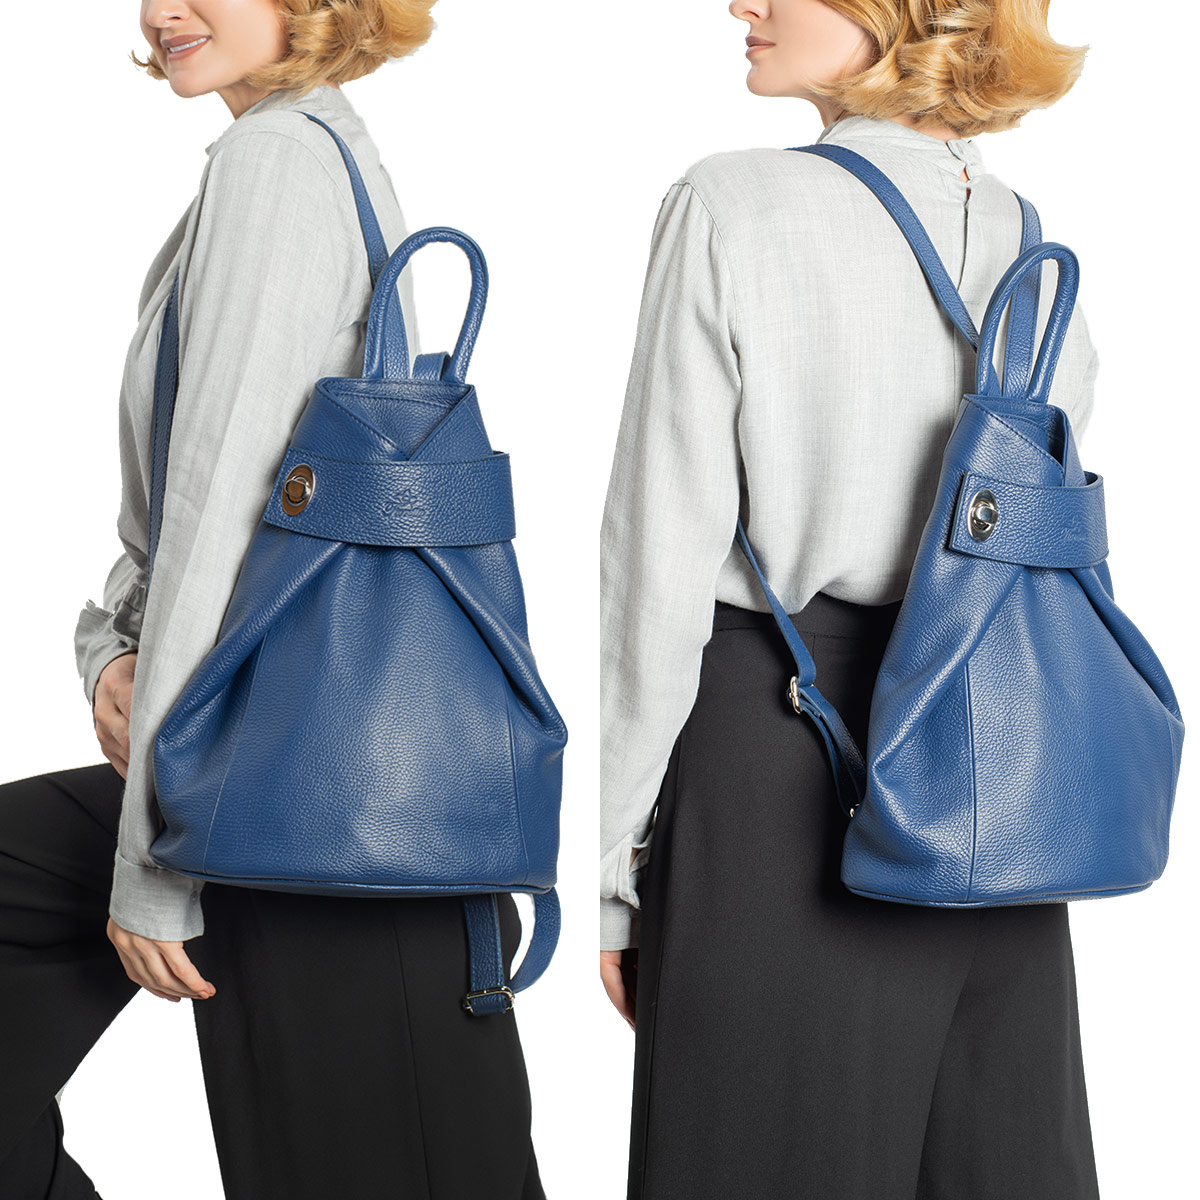 Fioretta Italian Genuine Leather Top Handle Backpack Handbag For Women - Blue